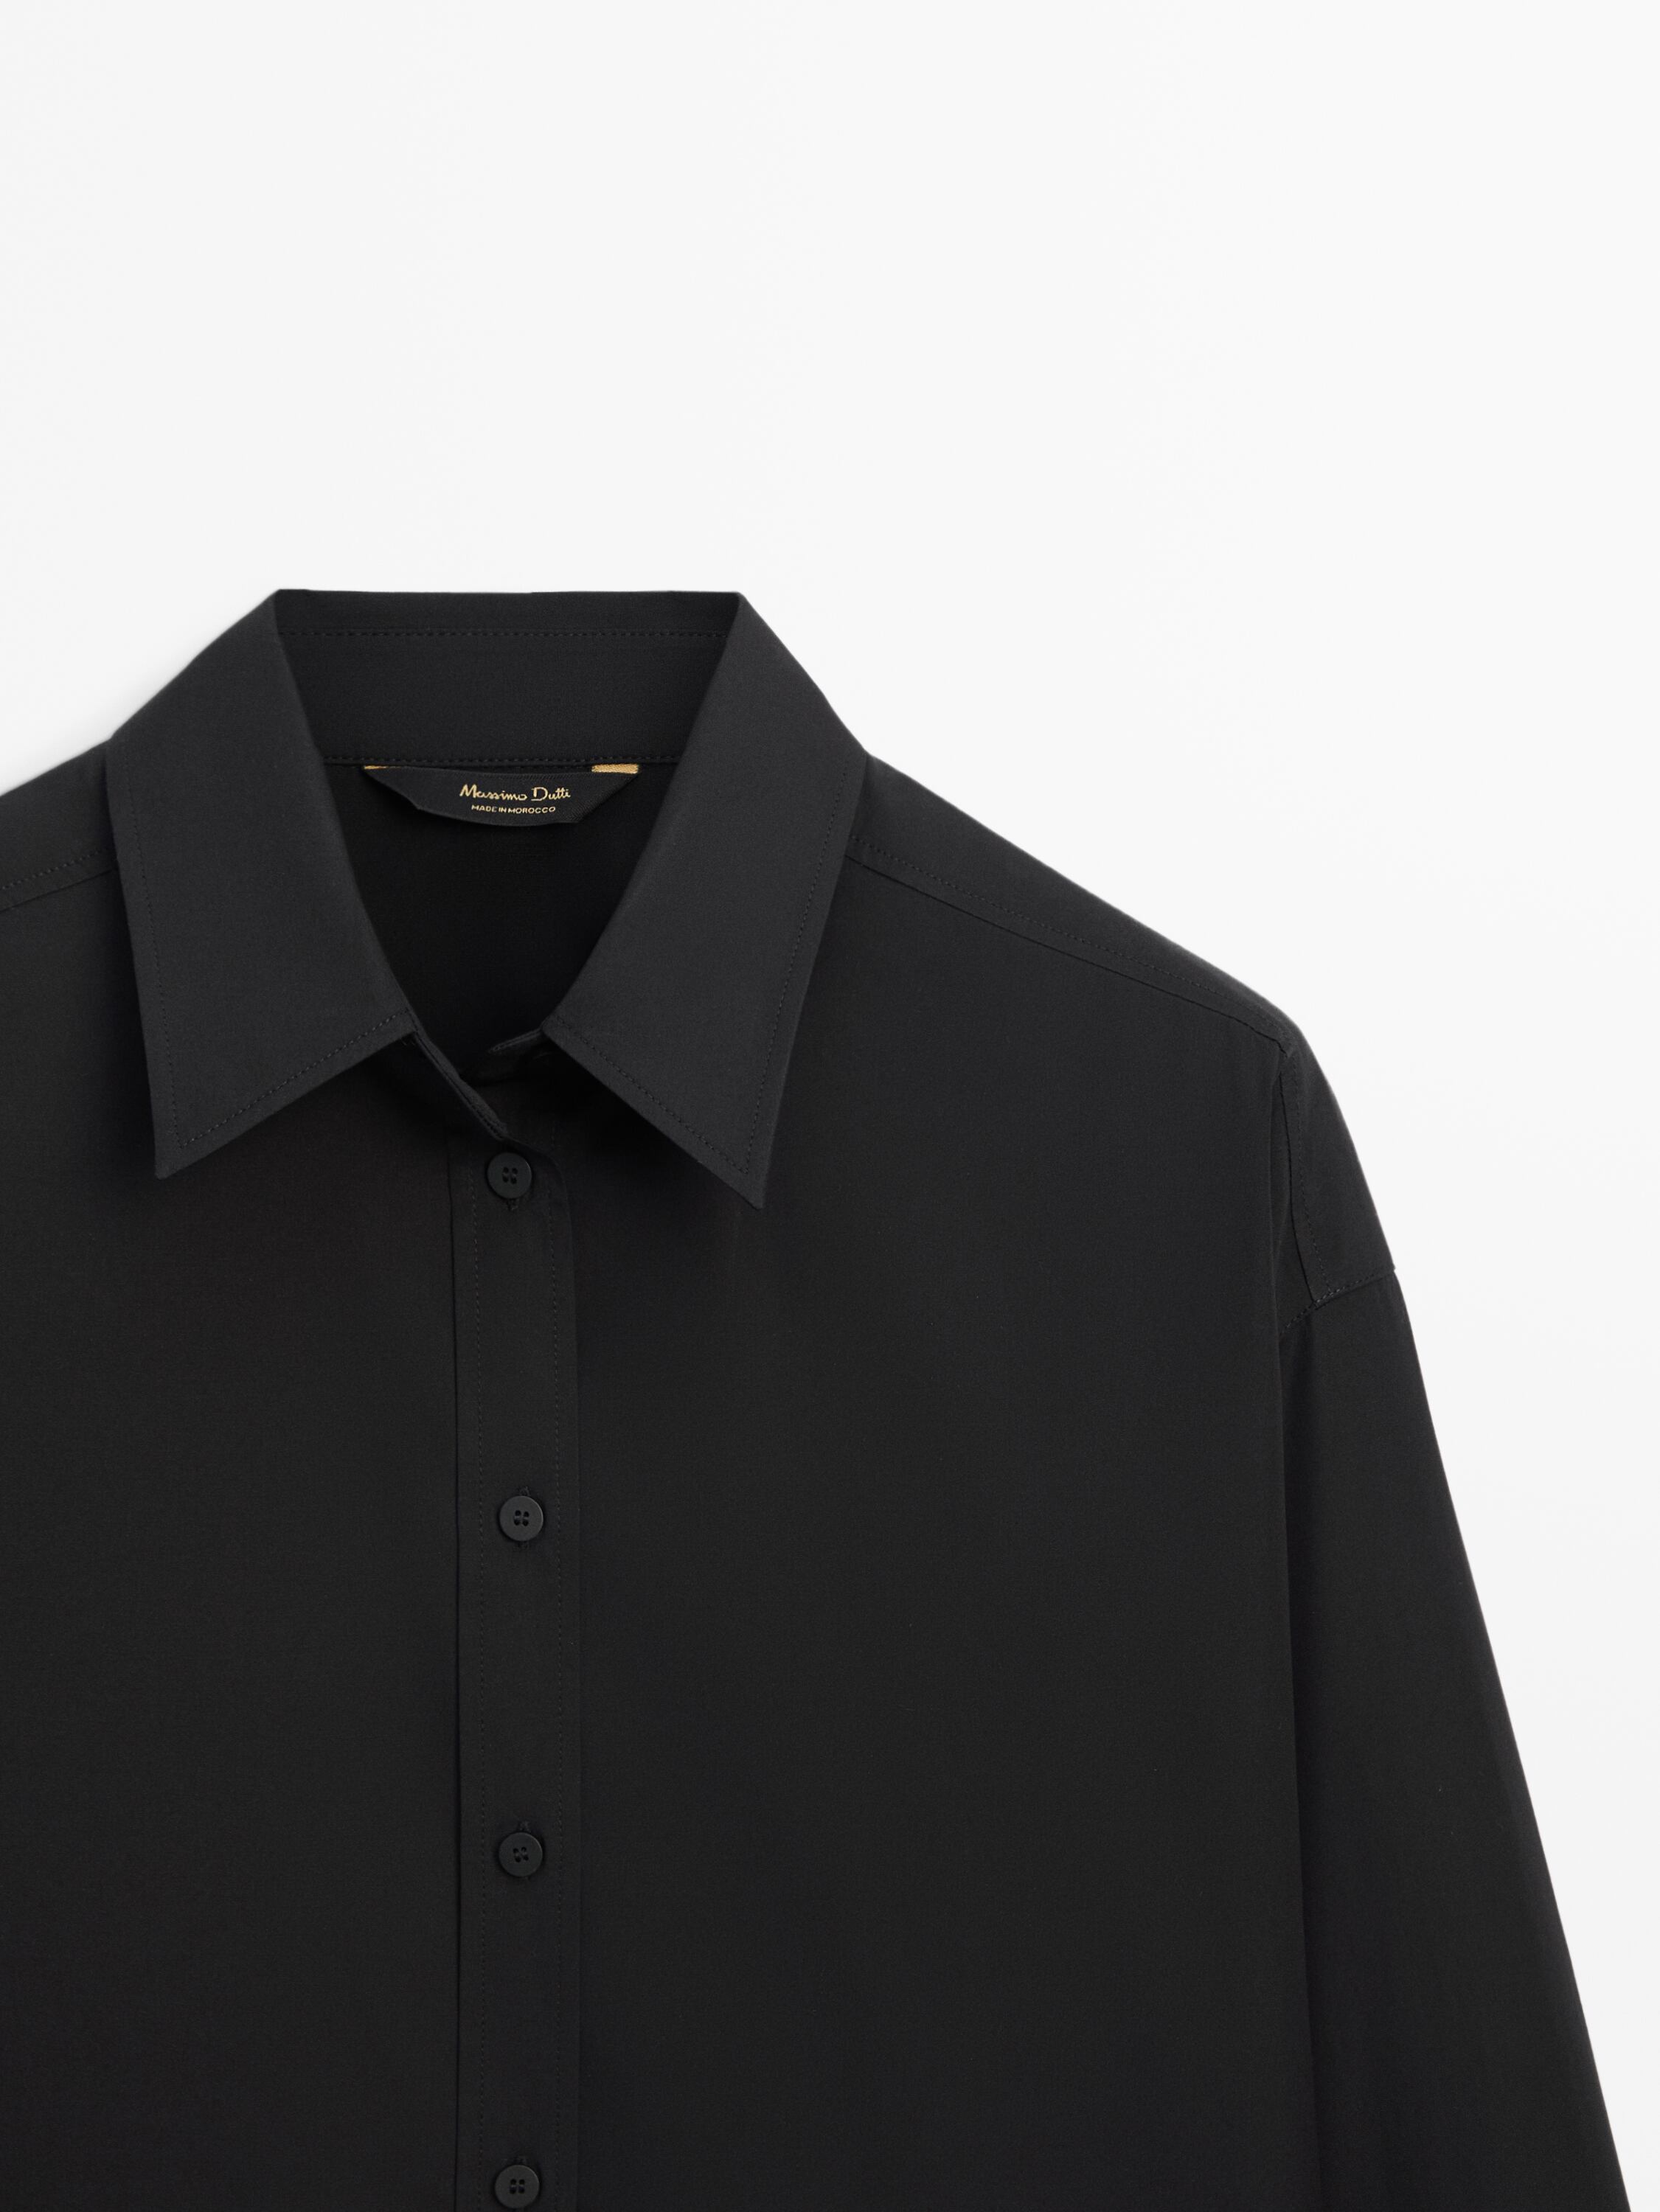 Black poplin oversize blouse